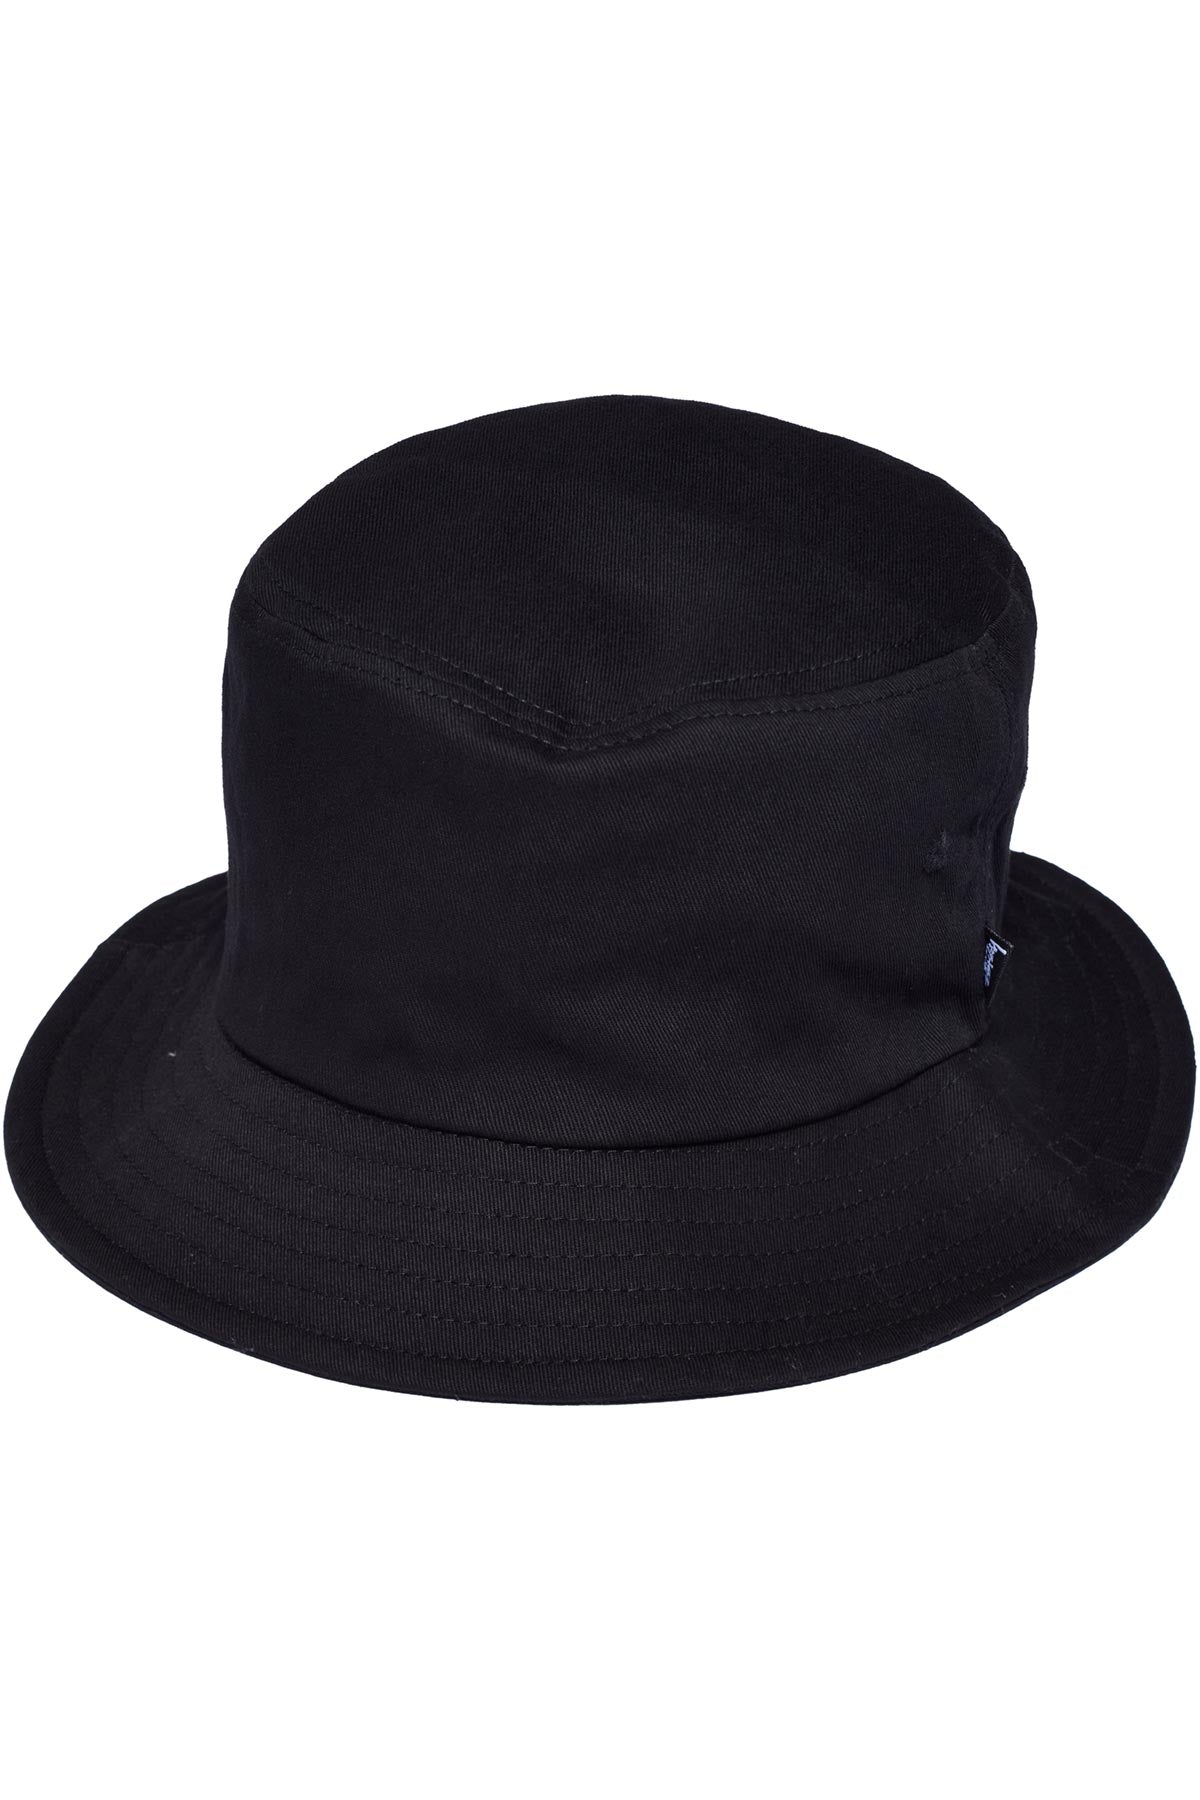 Stussy - stock bucket hat - black